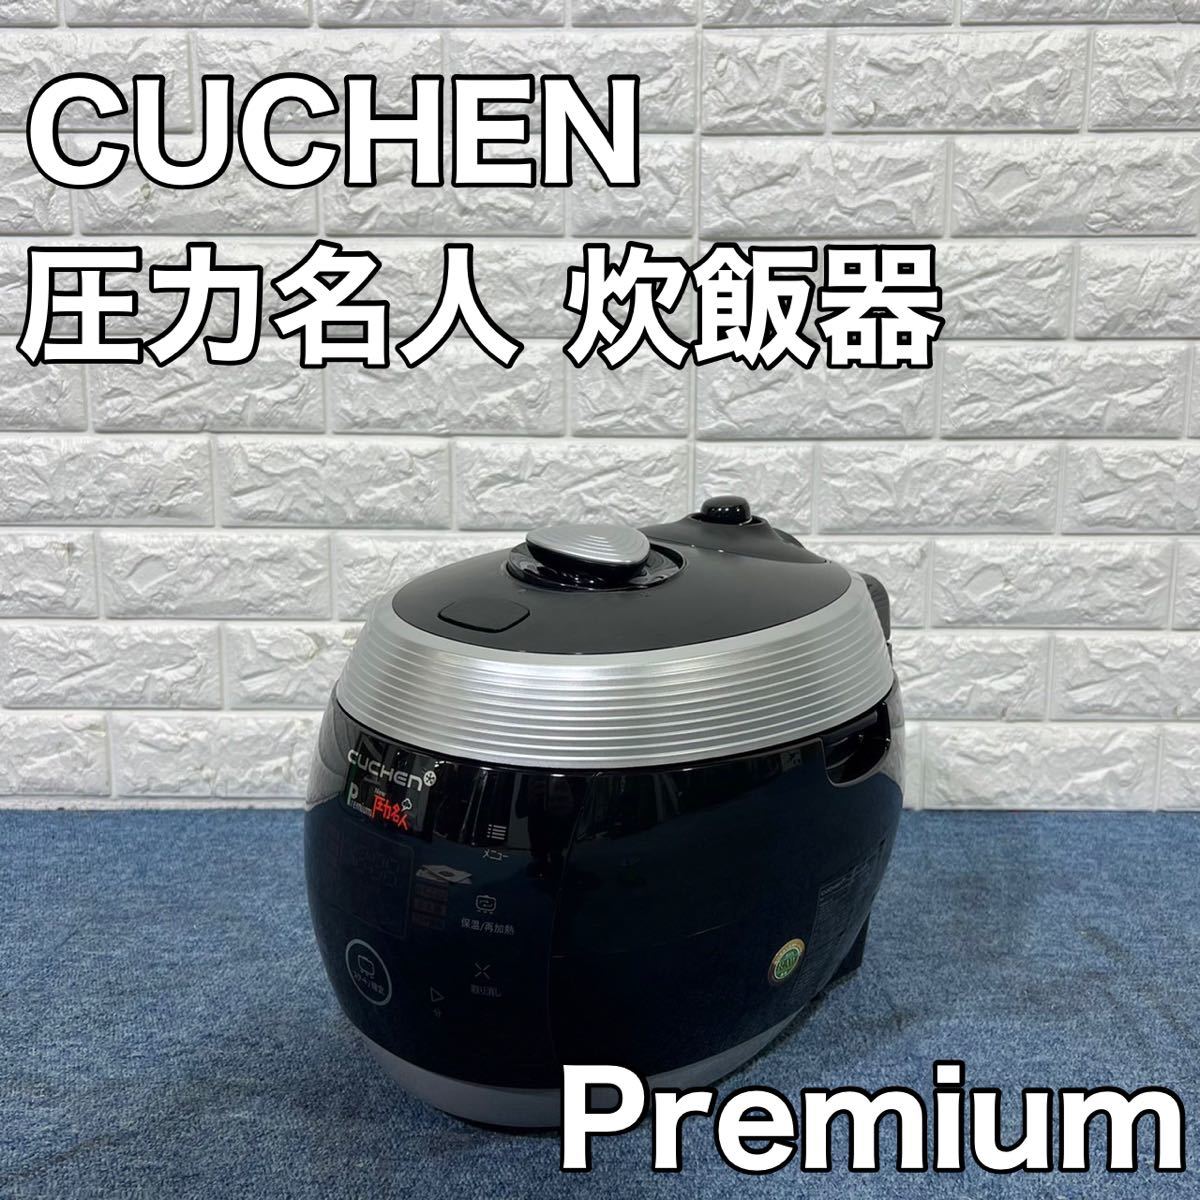 CUCHEN Premium New 圧力名人 FD064シリーズ CJS-FD0641RDVFJP 炊飯器